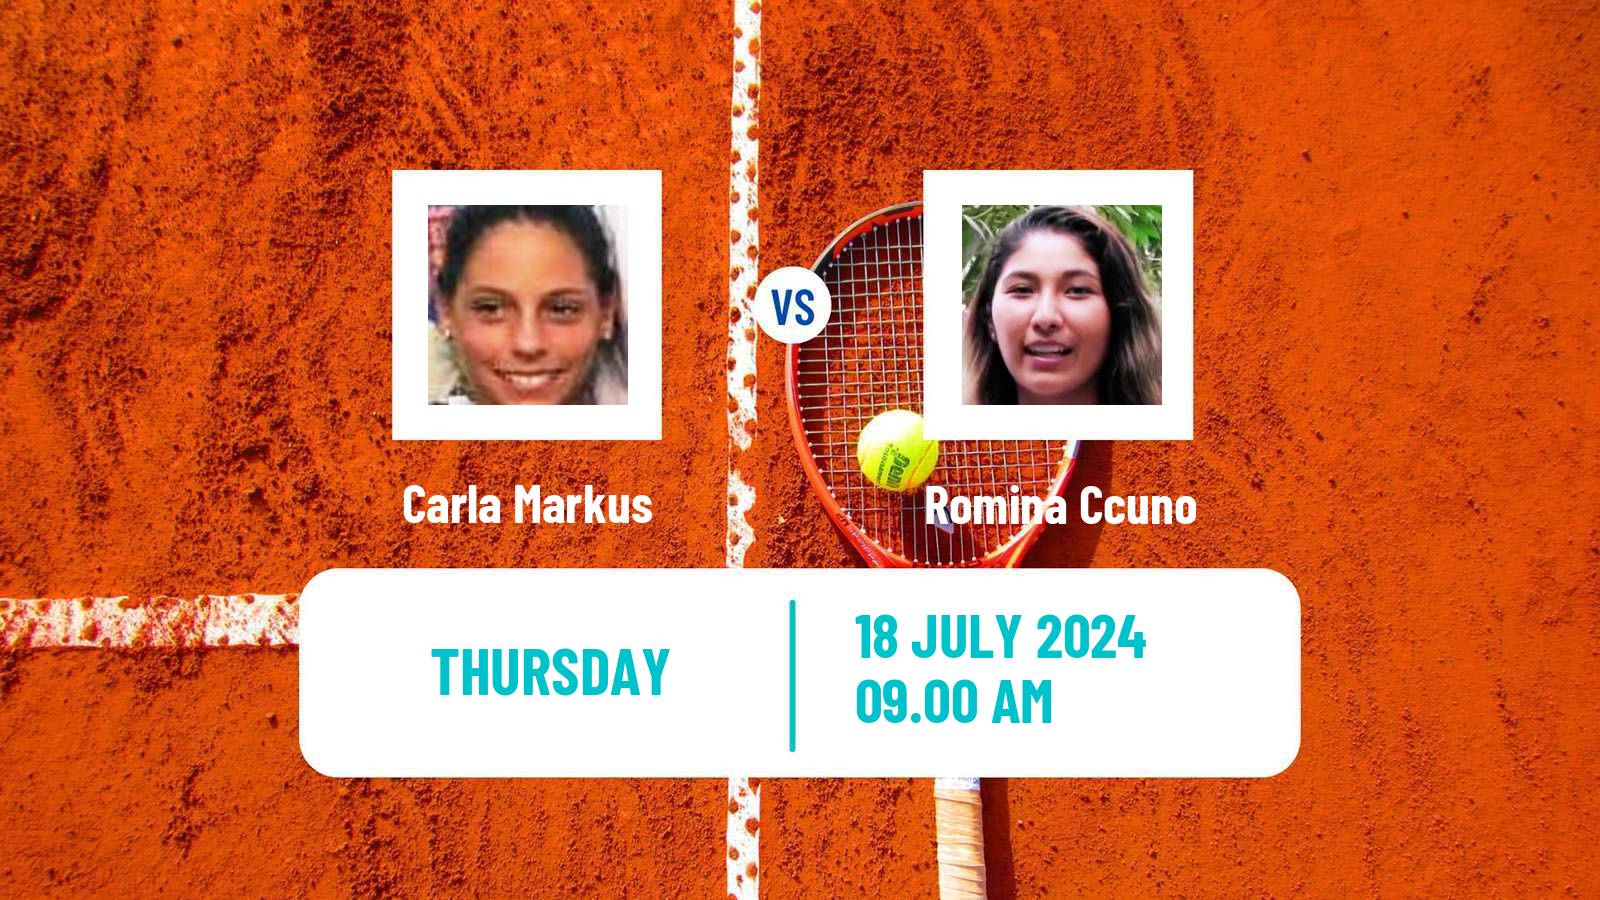 Tennis ITF W15 Lujan 2 Women Carla Markus - Romina Ccuno